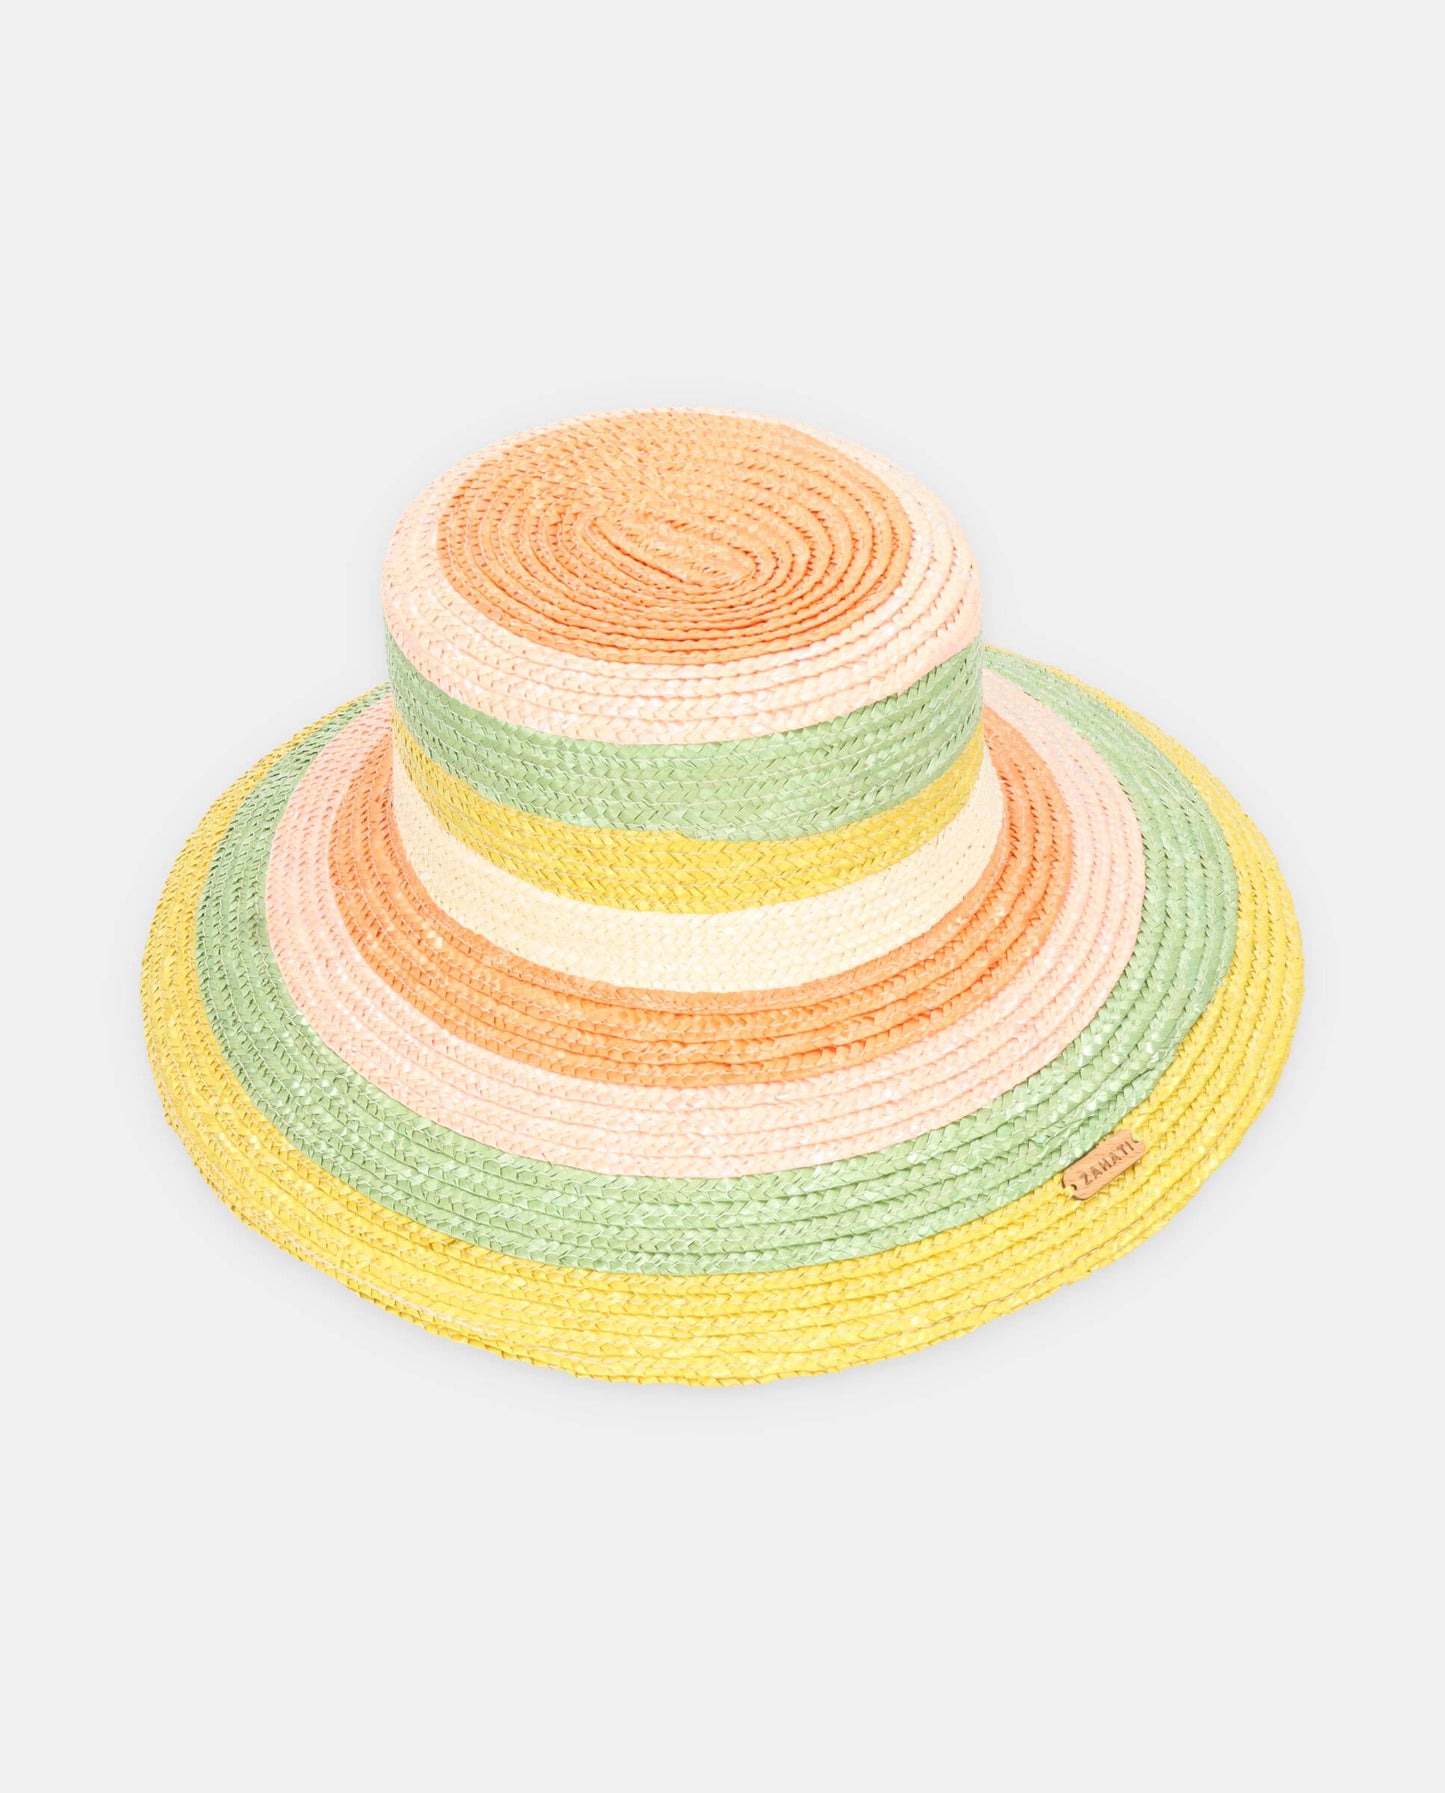 Cuchi pastel hat with M brim